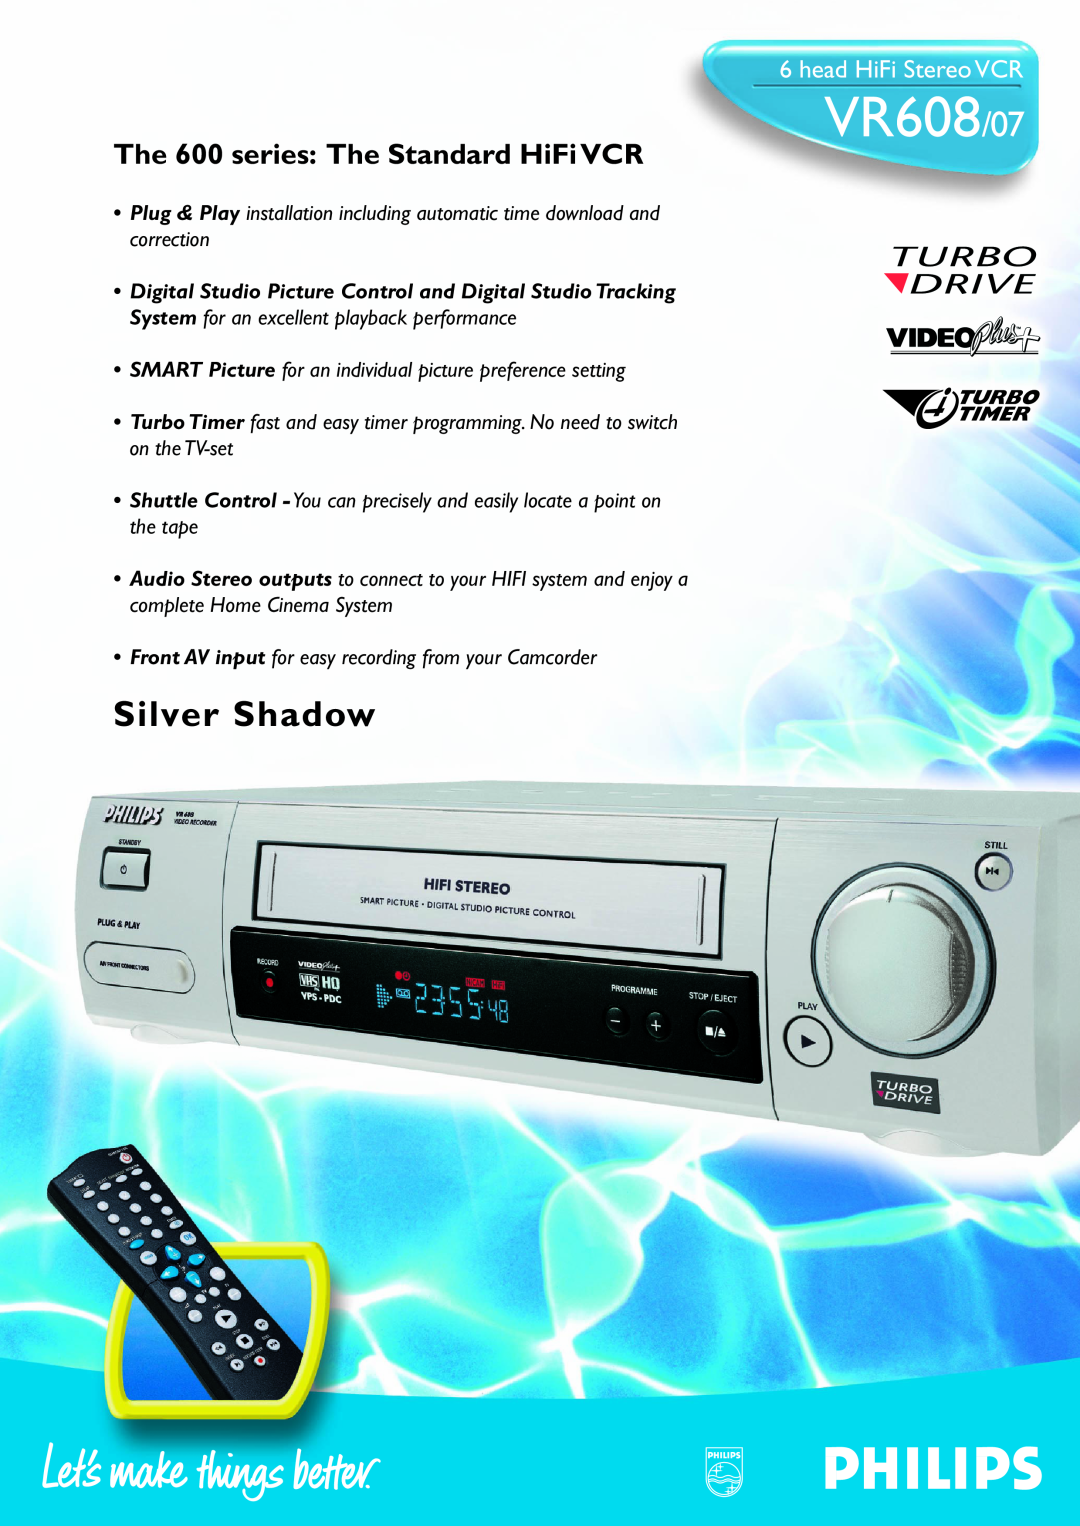 Philips manual VR608/07, head HiFi Stereo VCR, Silver Shadow, The 600 series The Standard HiFi VCR 